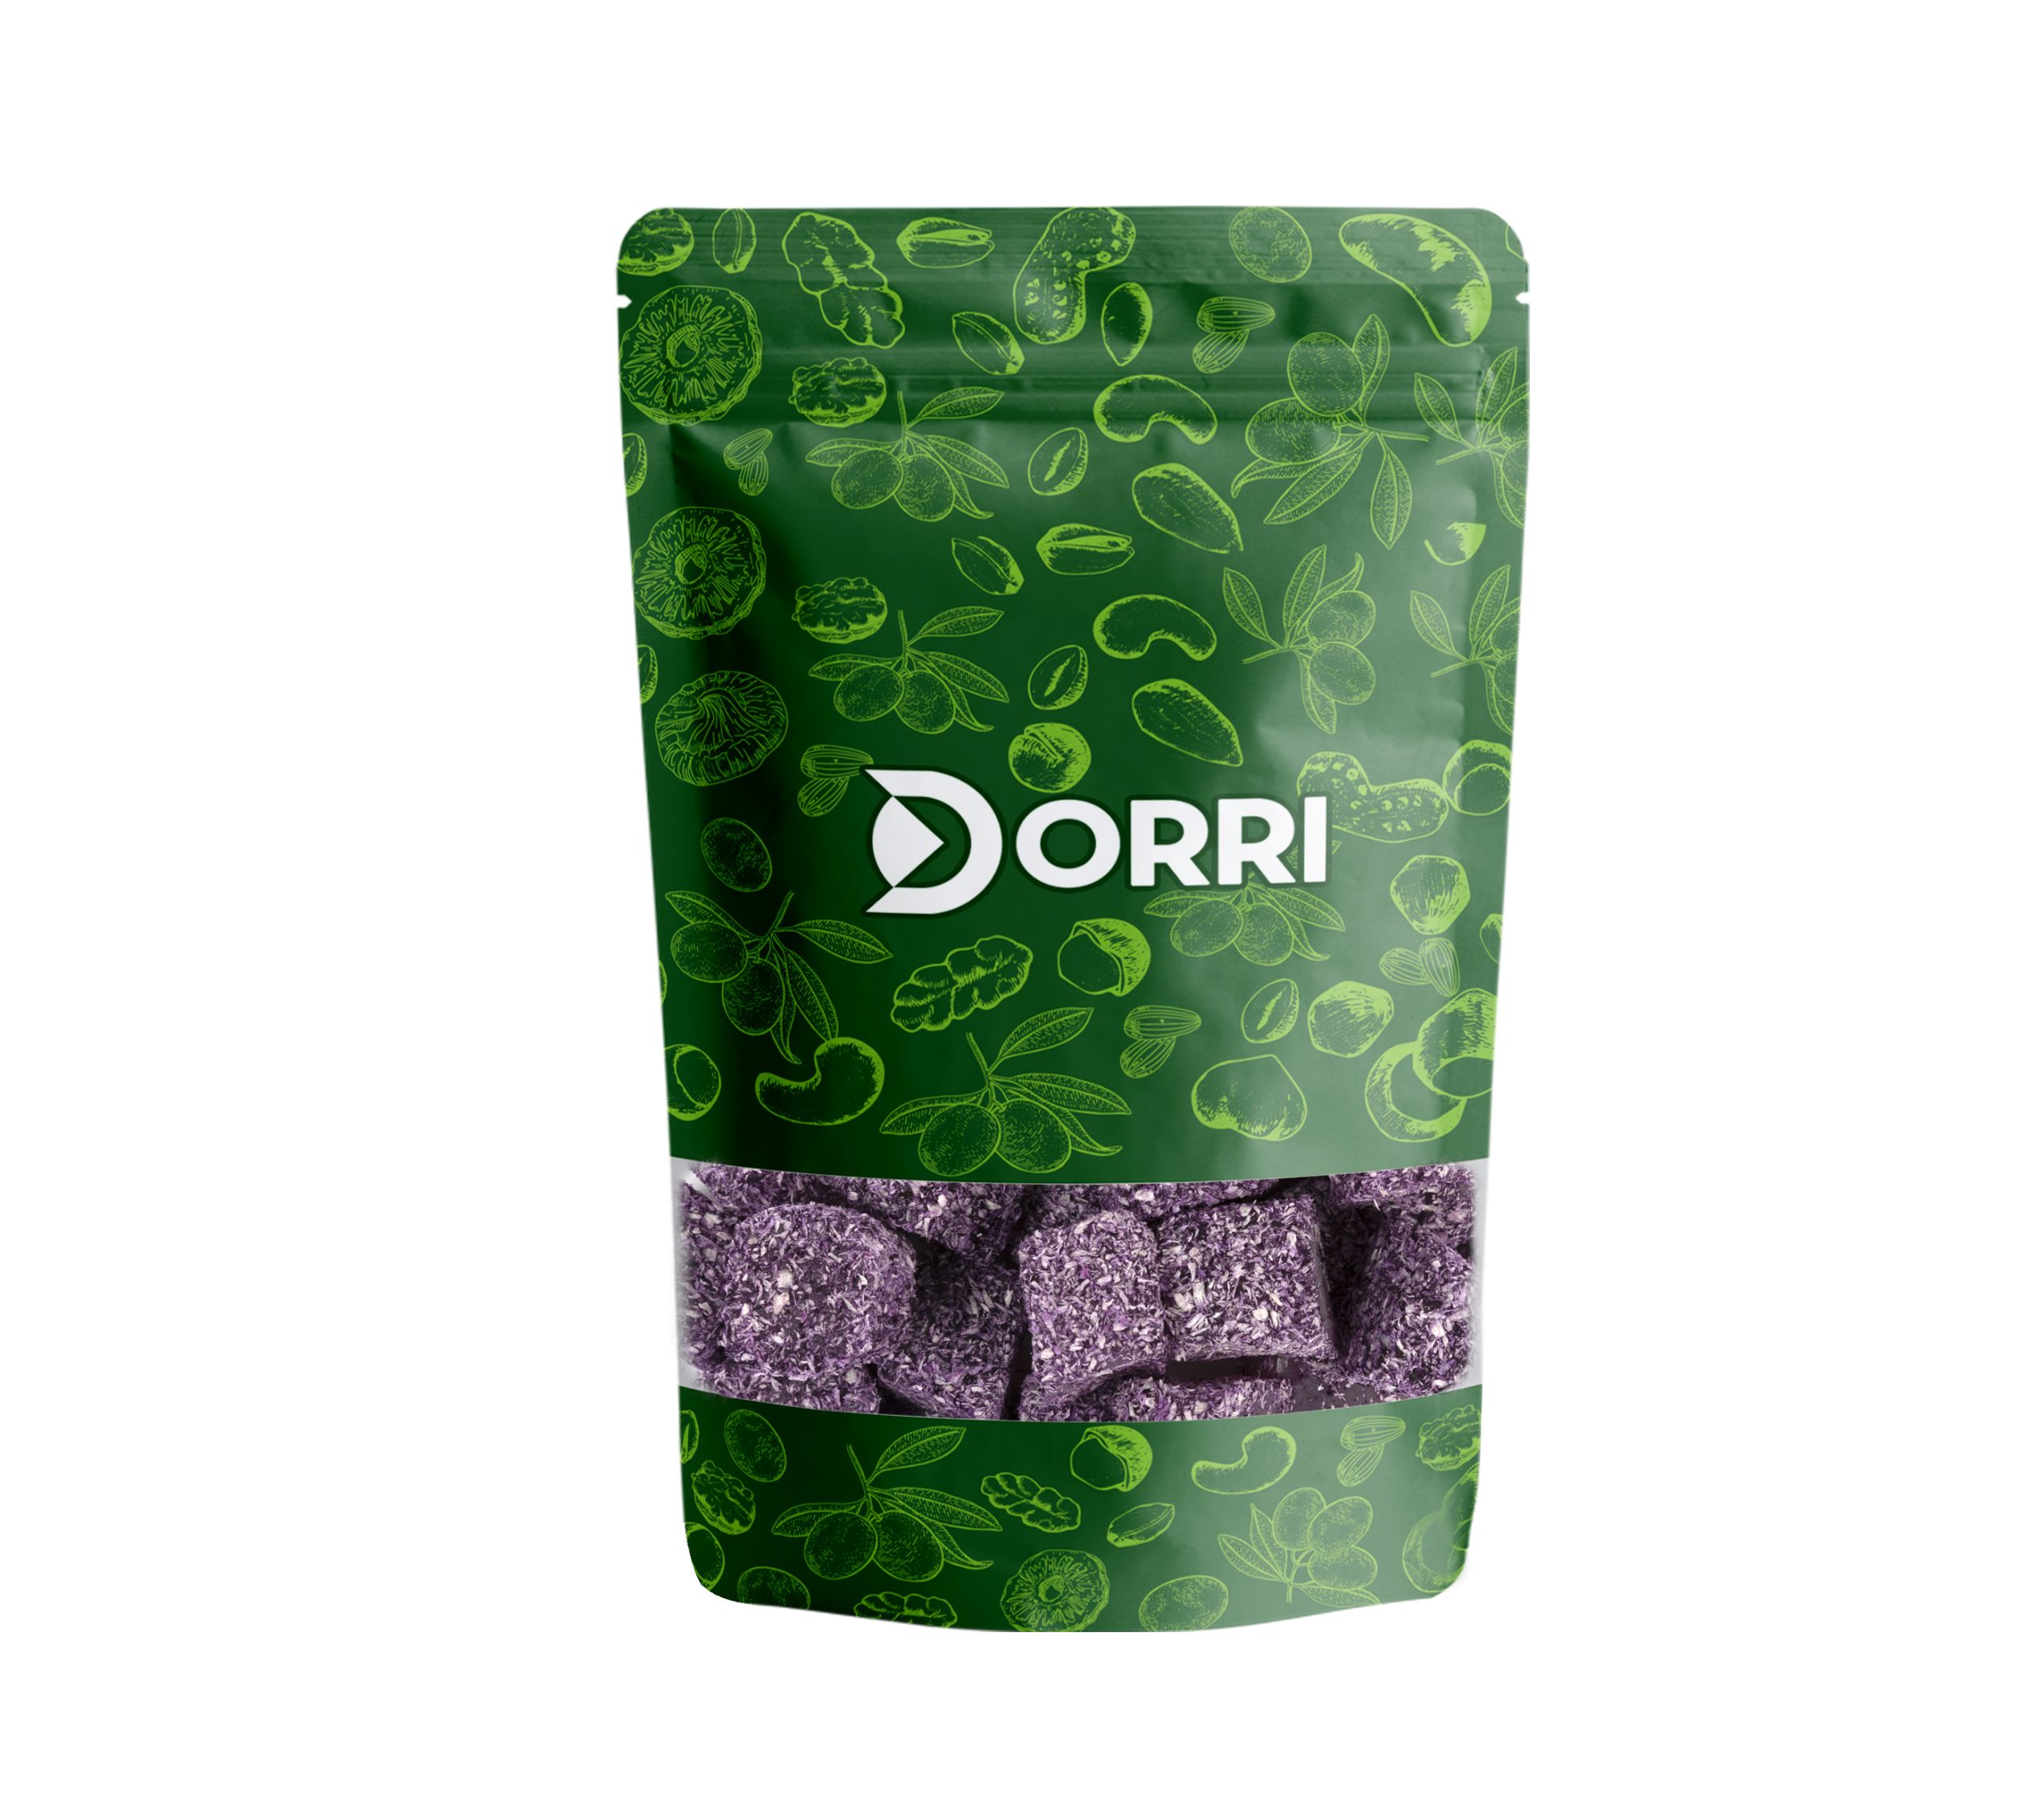 Dorri - Turkish Delight Violet